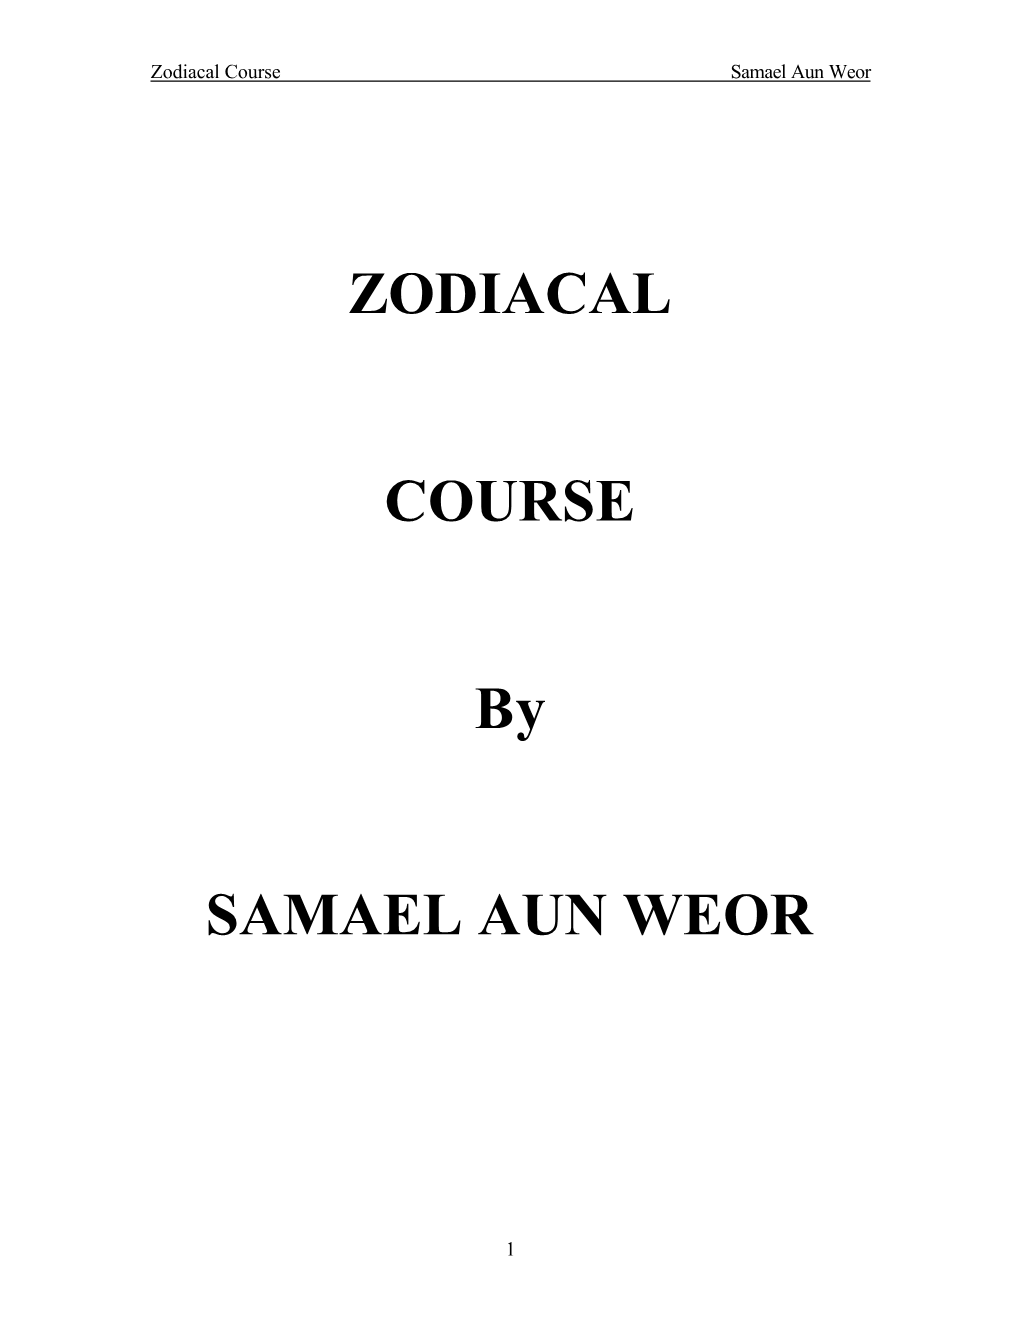 ZODIACAL COURSE by SAMAEL AUN WEOR